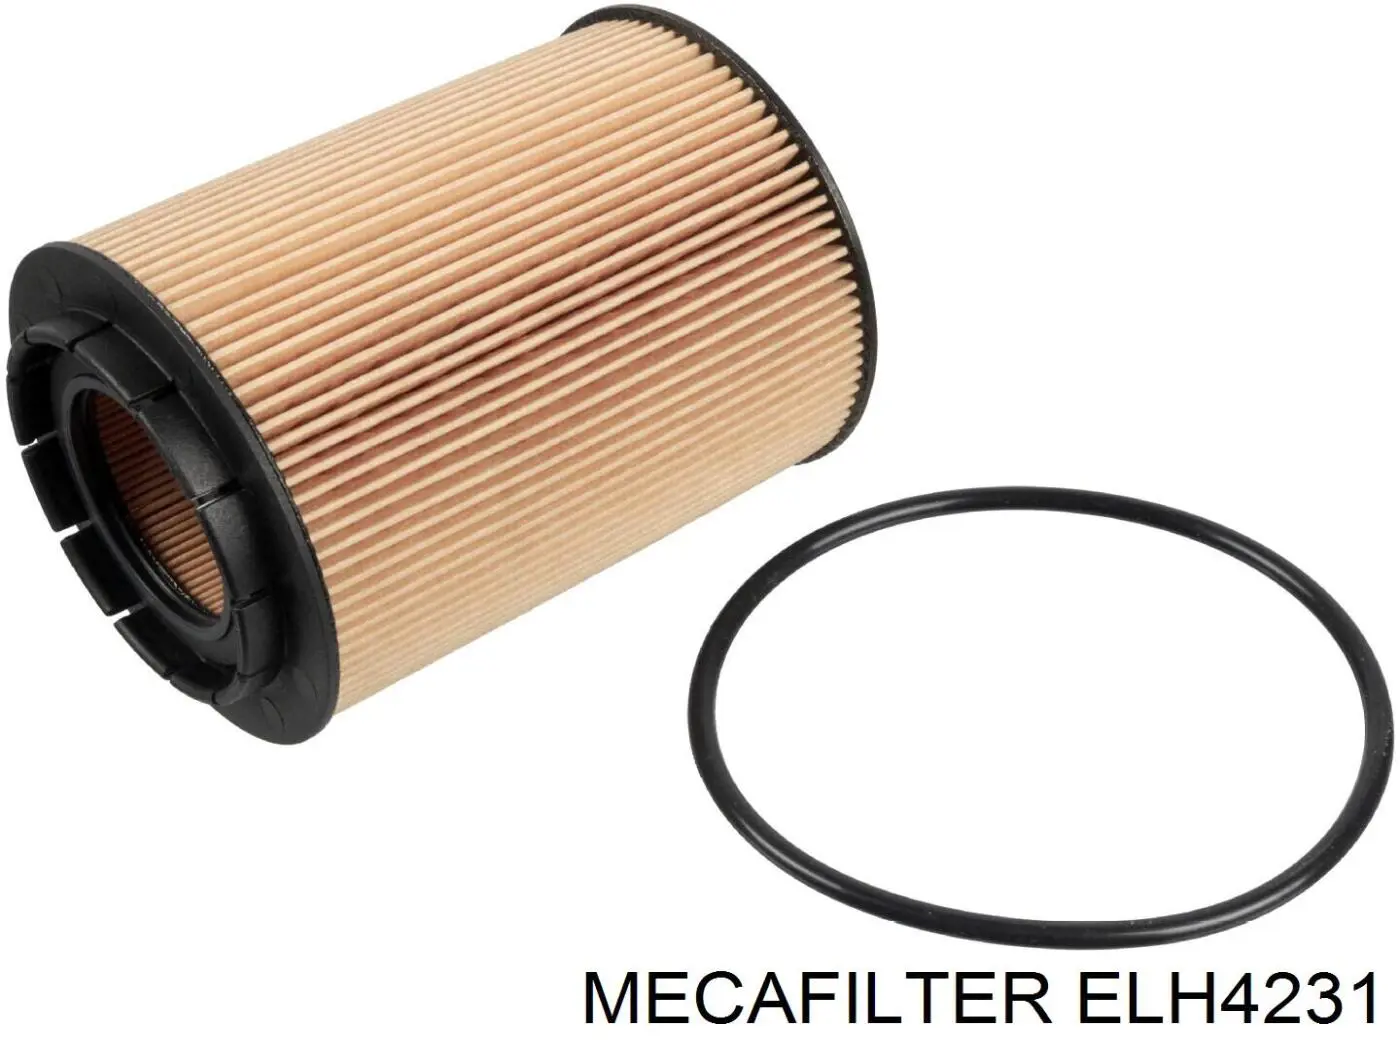 ELH4231 Mecafilter filtro de aceite